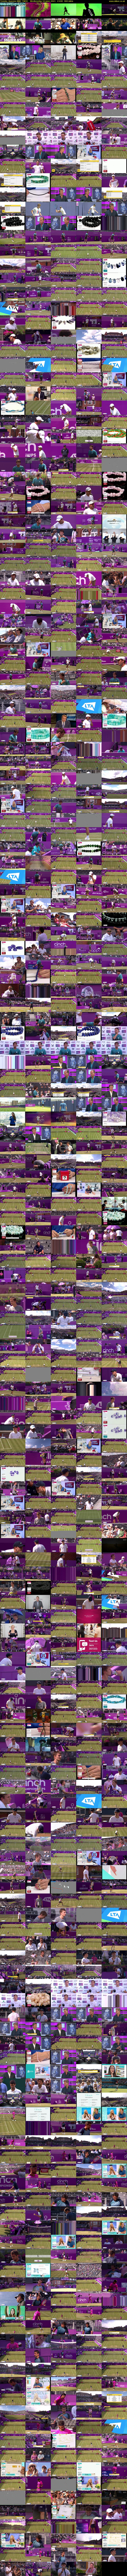 Tennis: Queens (BBC TWO) Wednesday 16 June 2021 13:00 - 18:00